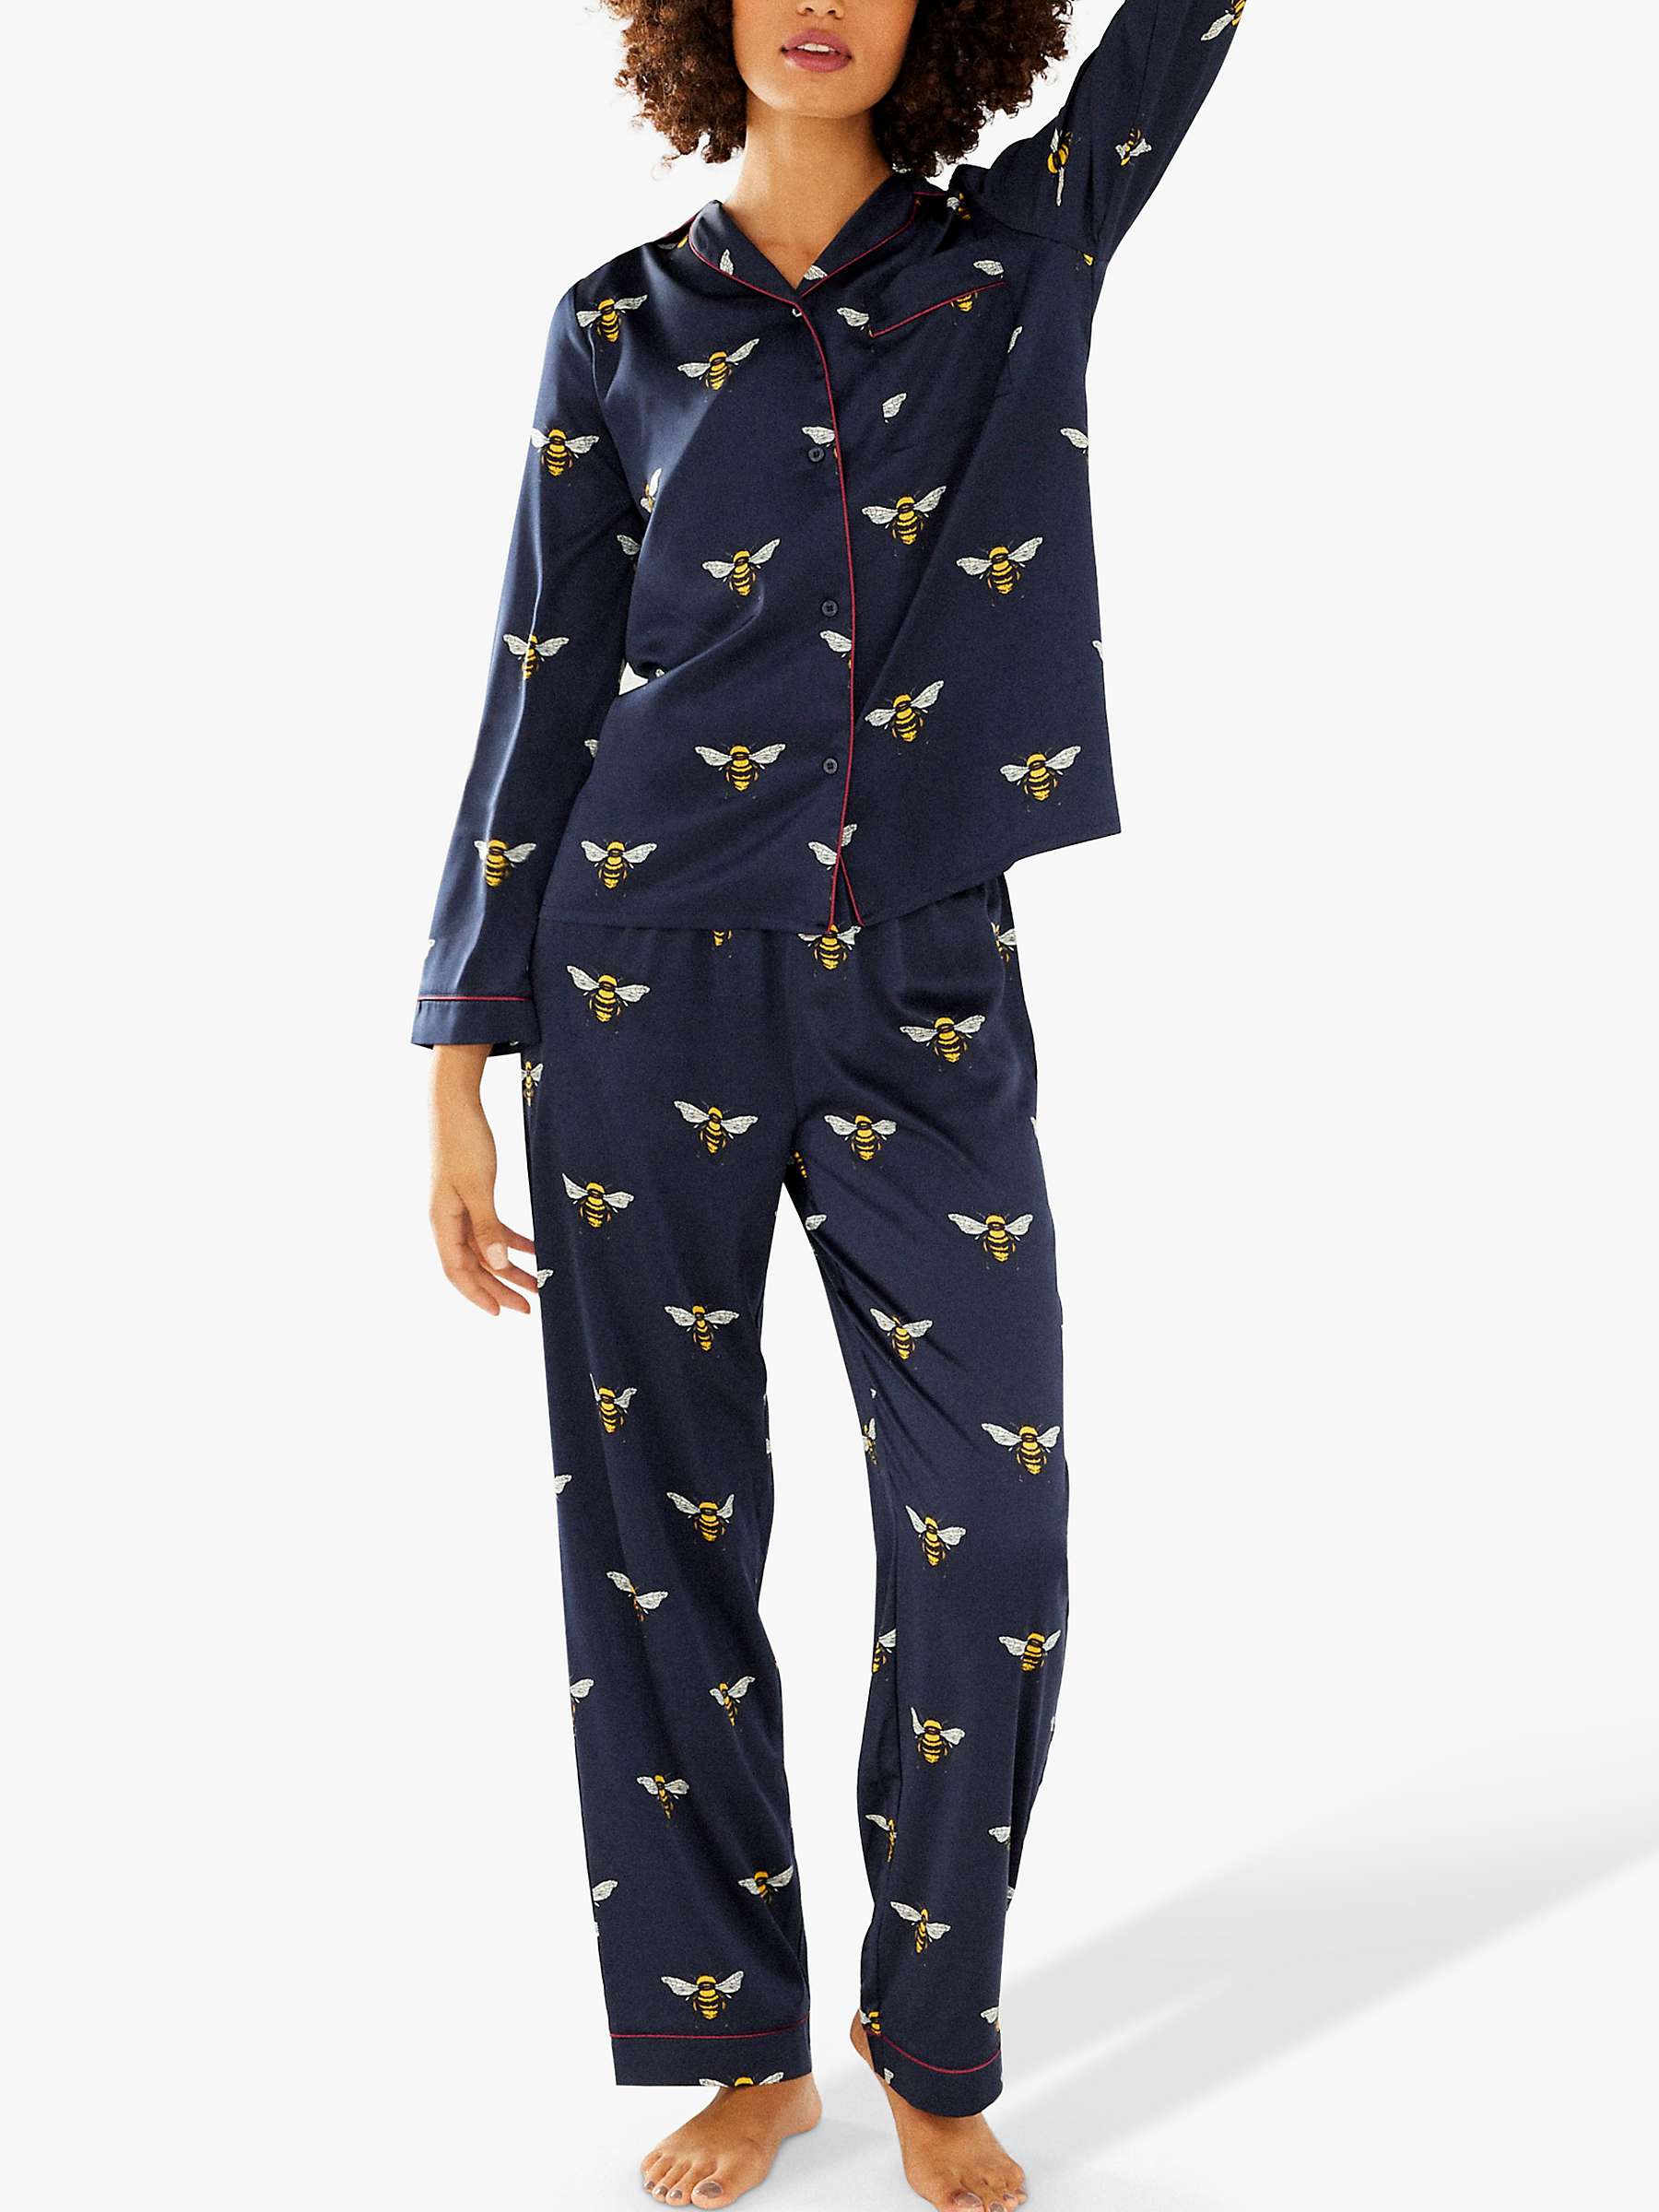 Buy Chelsea Peers Bumble Bee Satin Pyjama Set Online at johnlewis.com